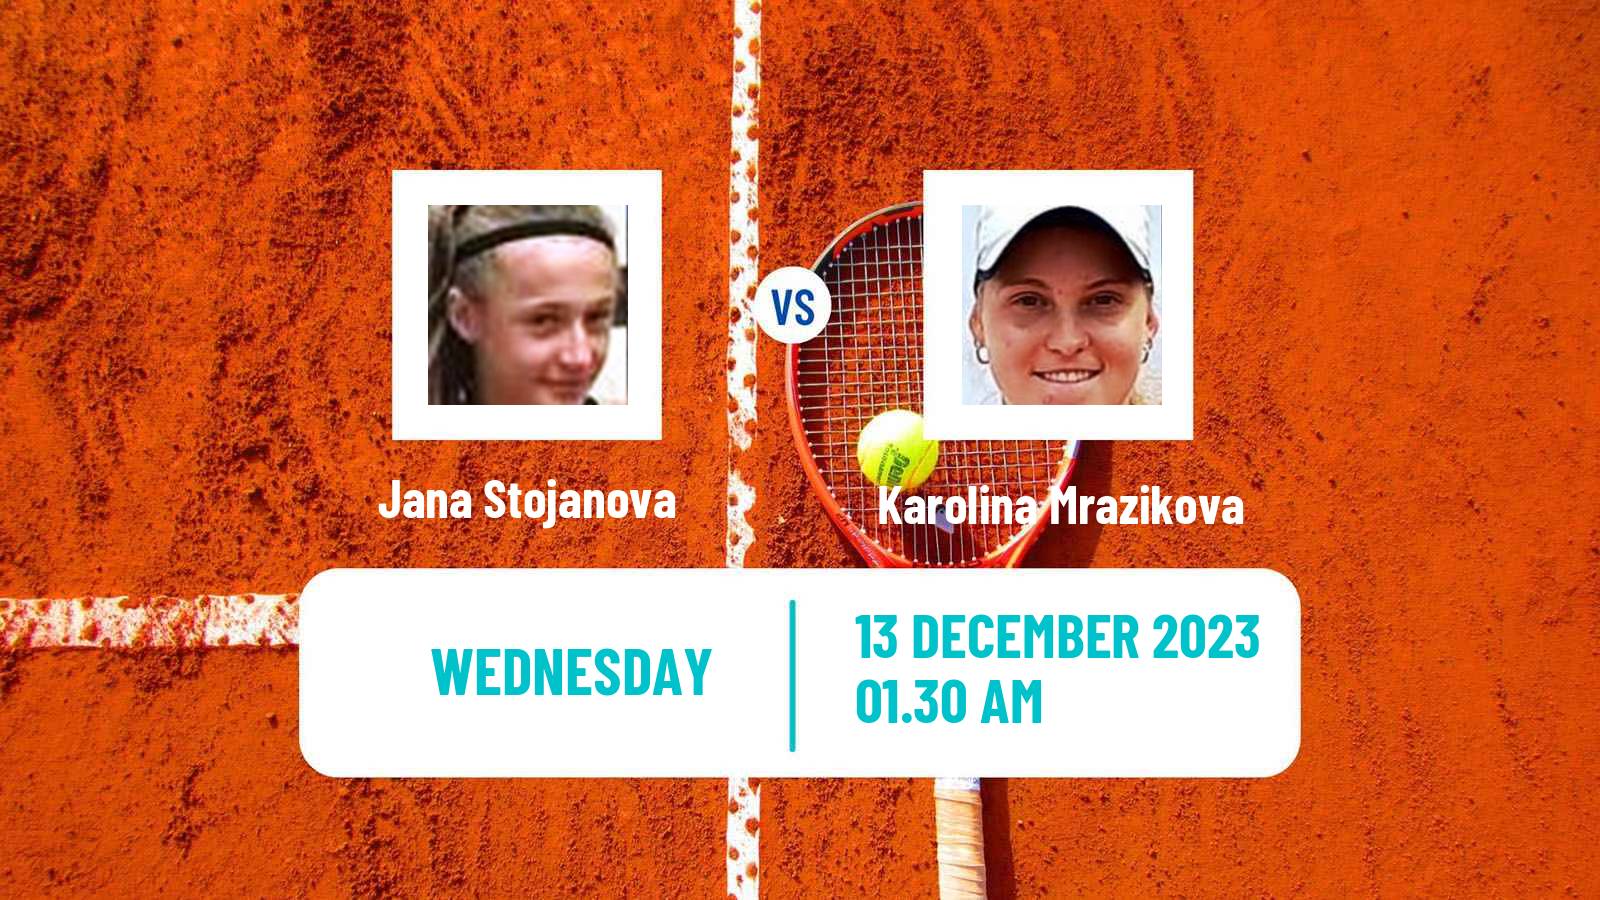 Tennis ITF W15 Antalya 22 Women Jana Stojanova - Karolina Mrazikova